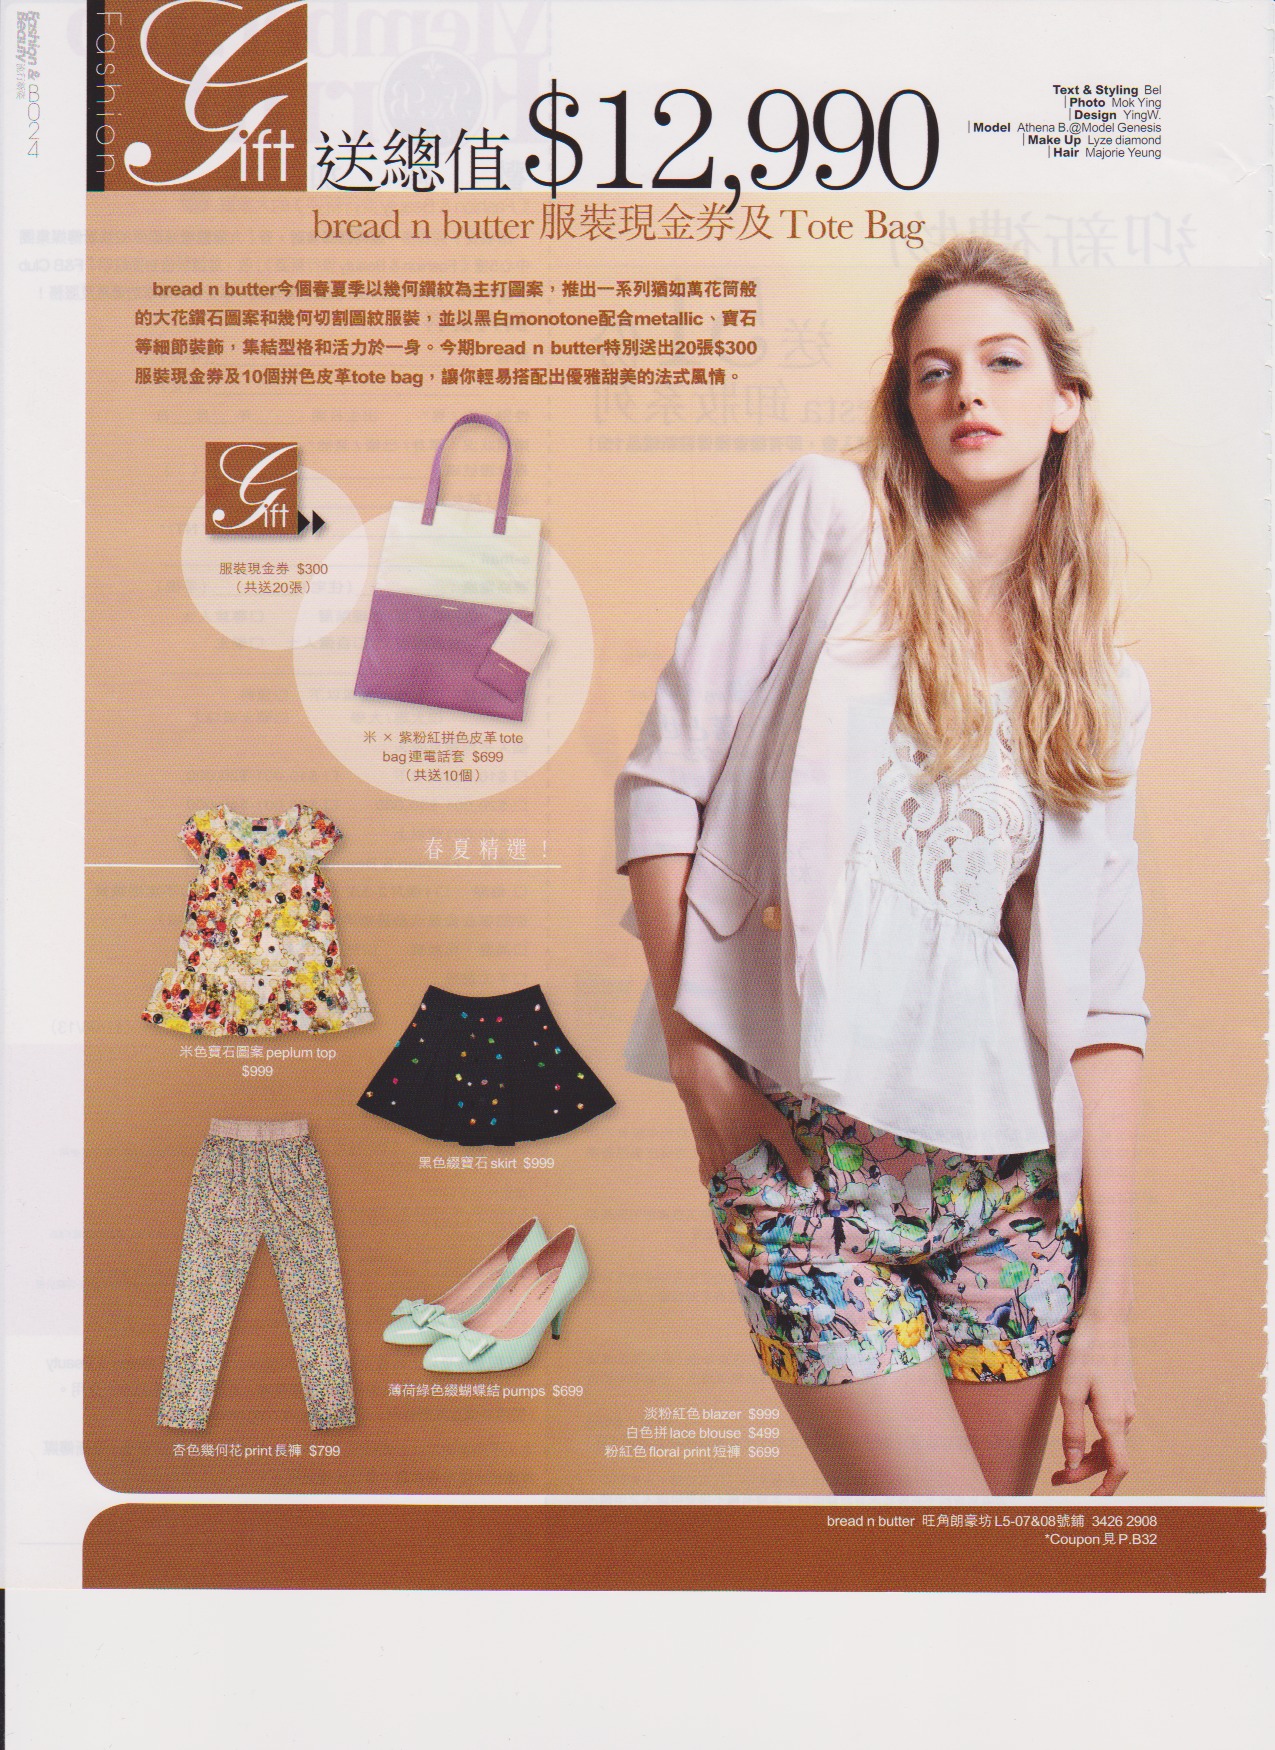 Beauty & Fashion Magazine- Hong Kong